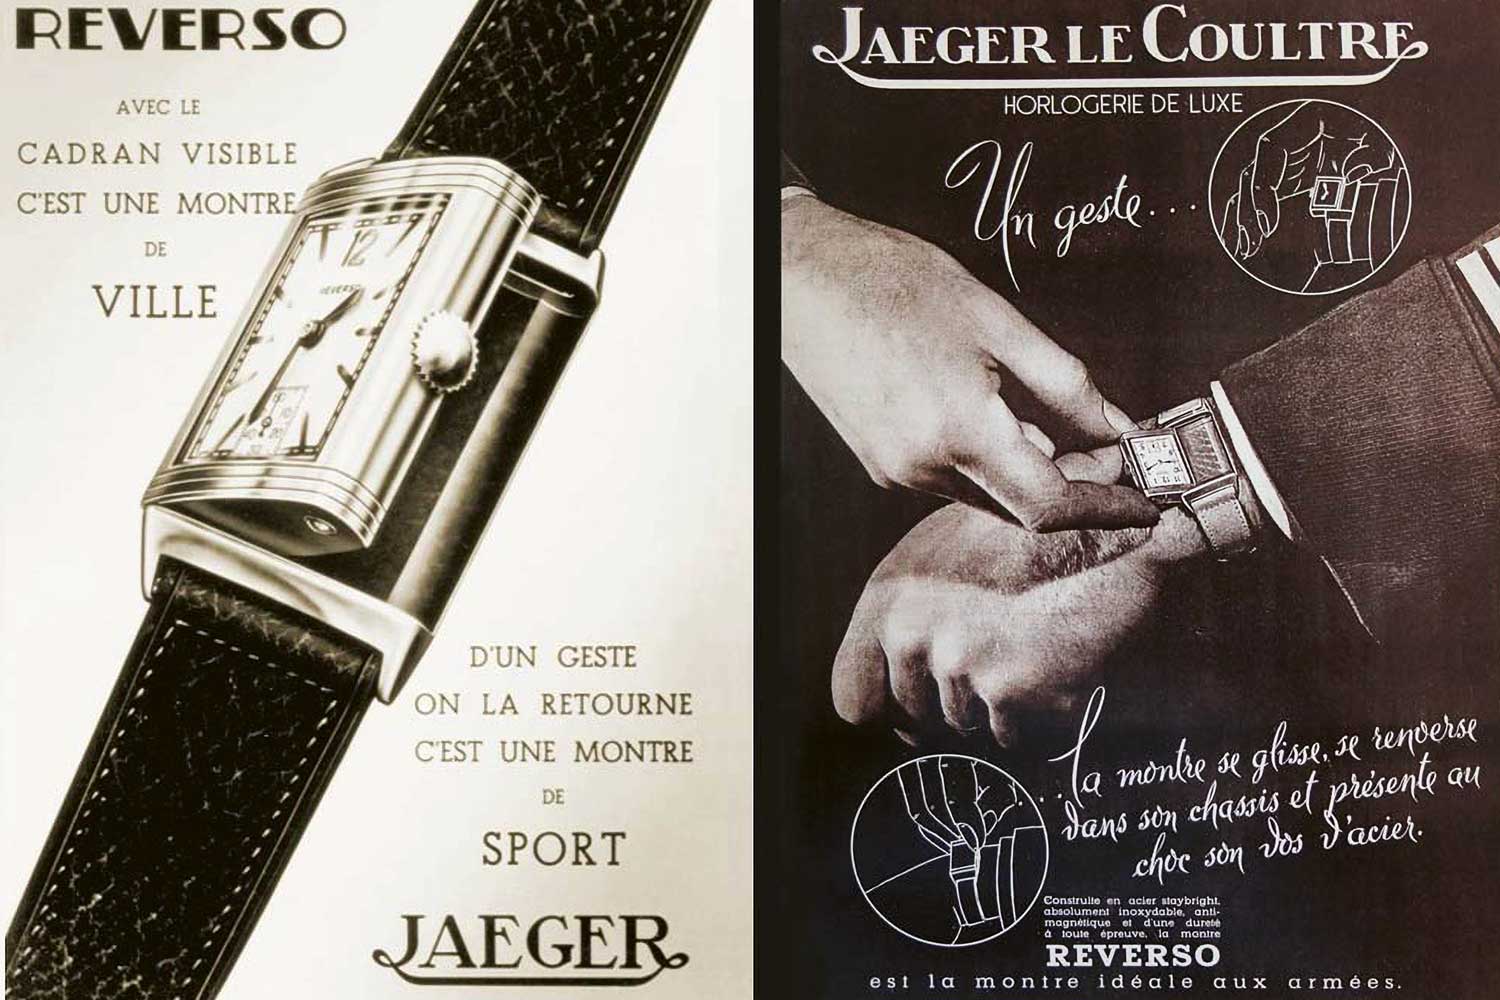 Vintage advertisements for Jaeger-LeCoultre’s Reverso.